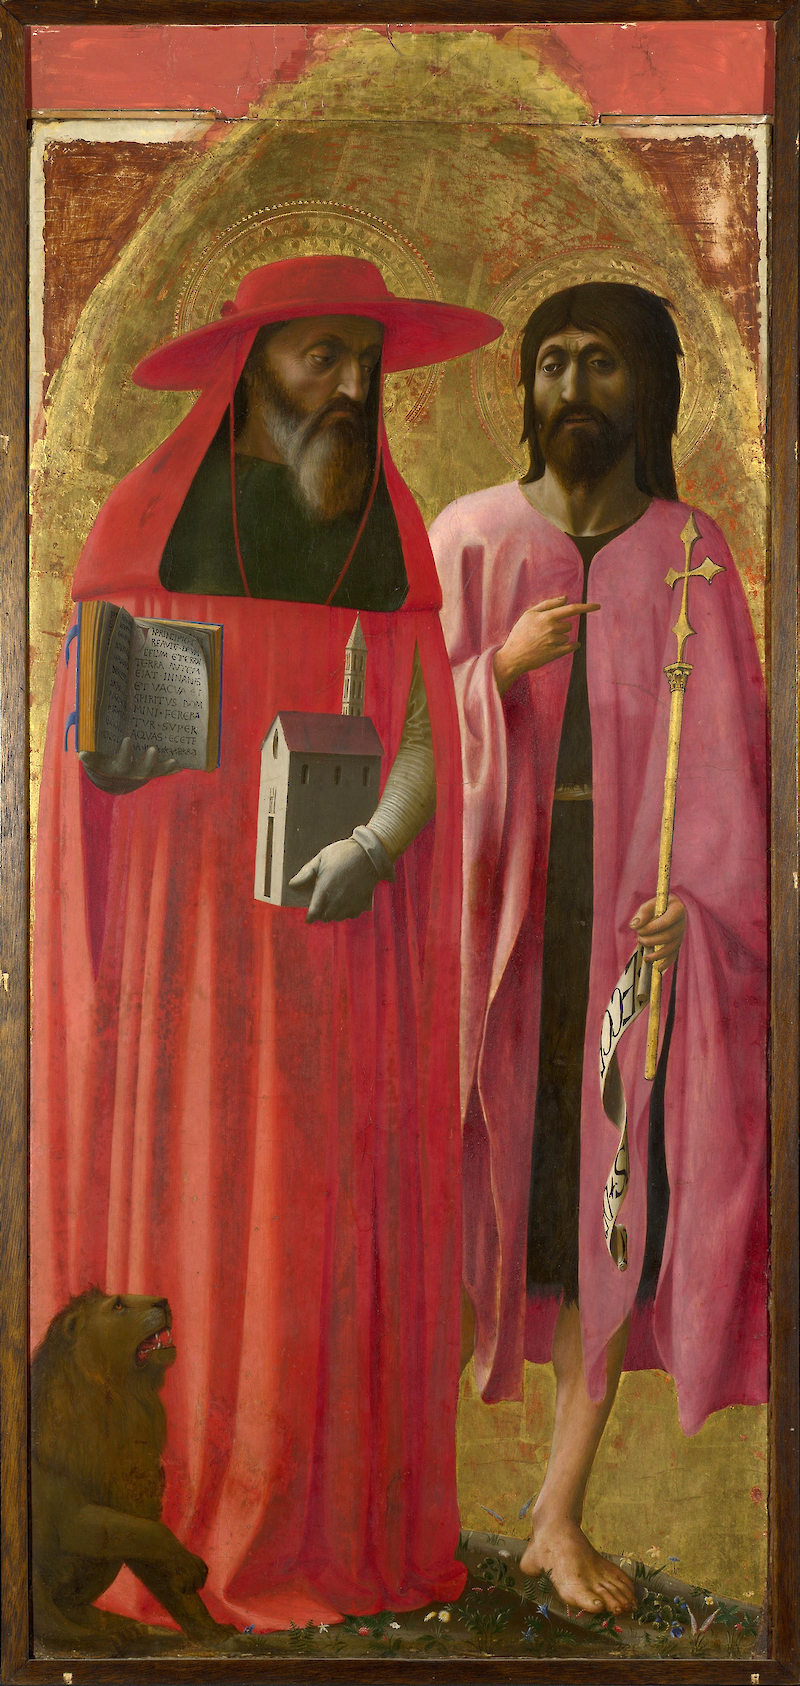 Saints Jerome and John the Baptist scale comparison